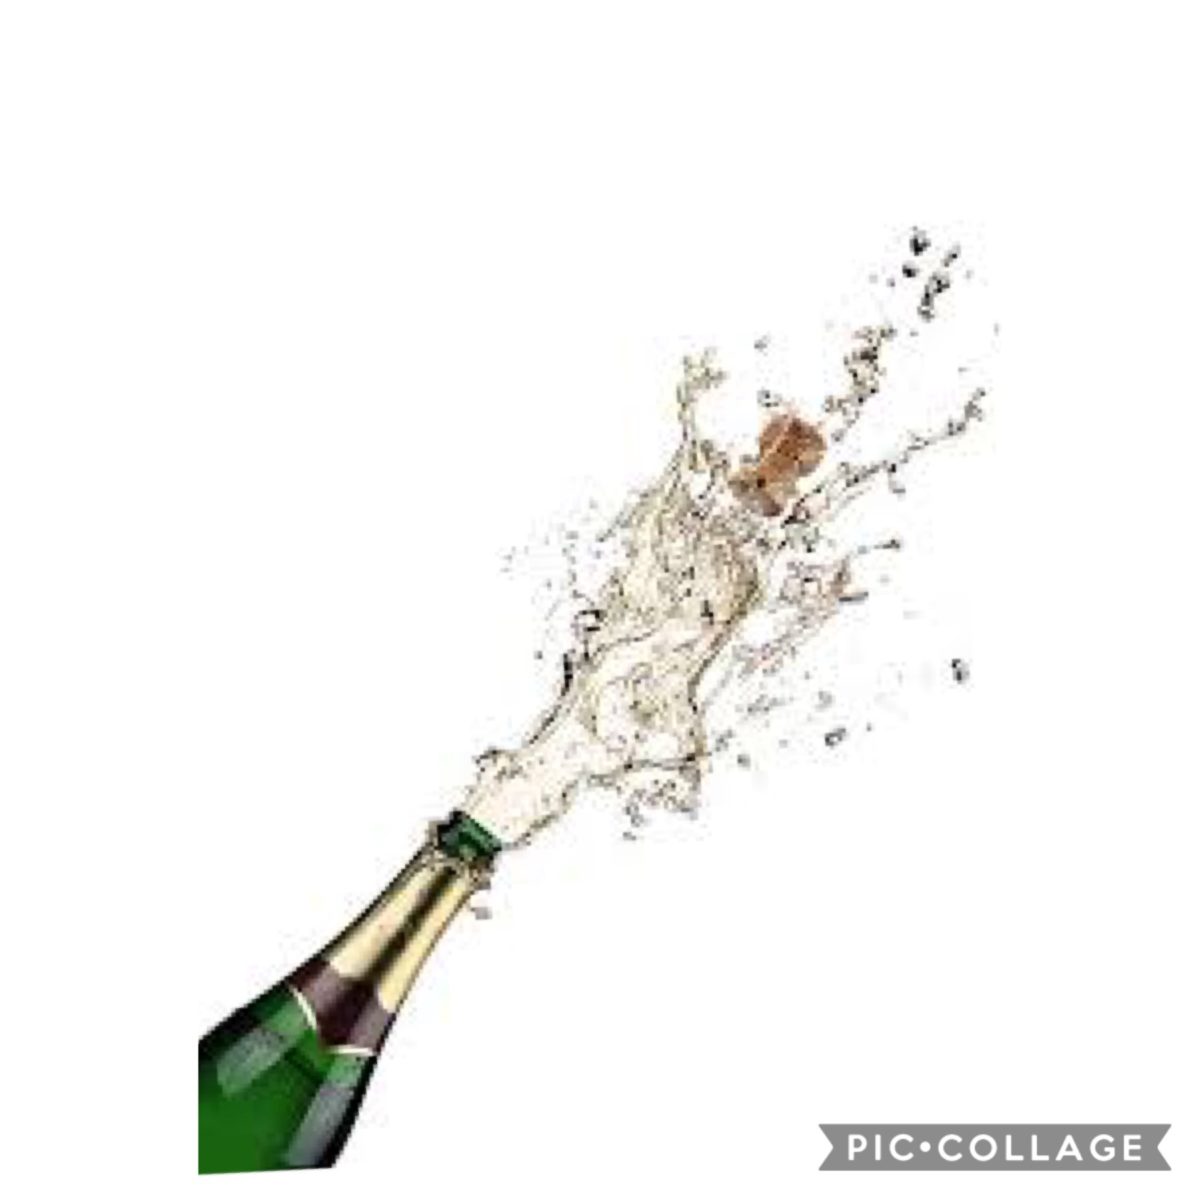 Champagne Sales 2018:  Record High of €4.9 billion